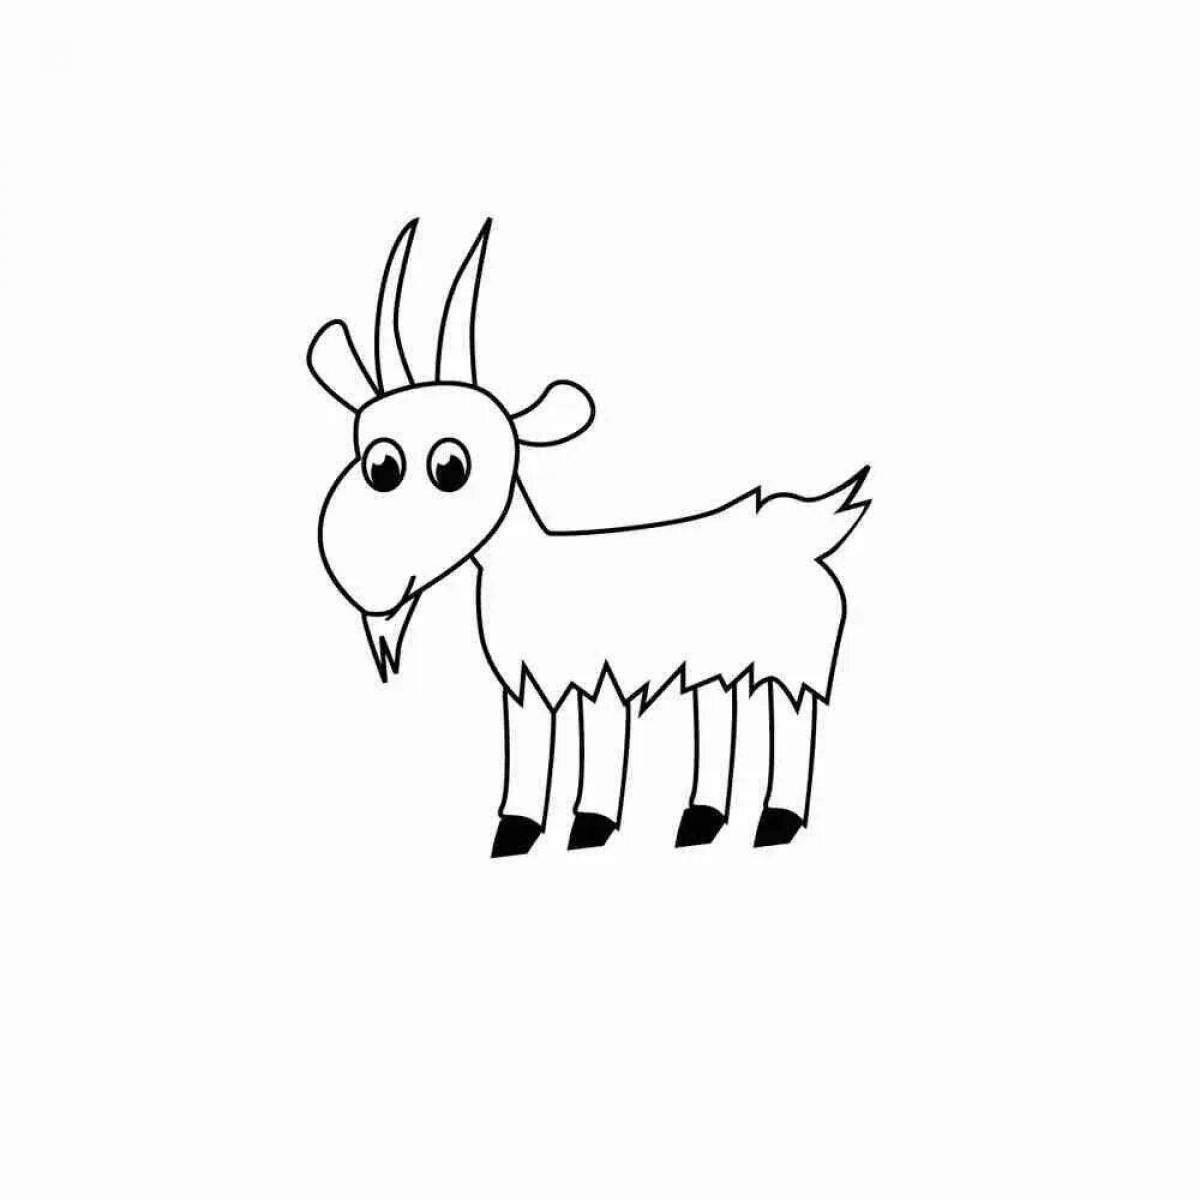 Joyful goat coloring book for kids